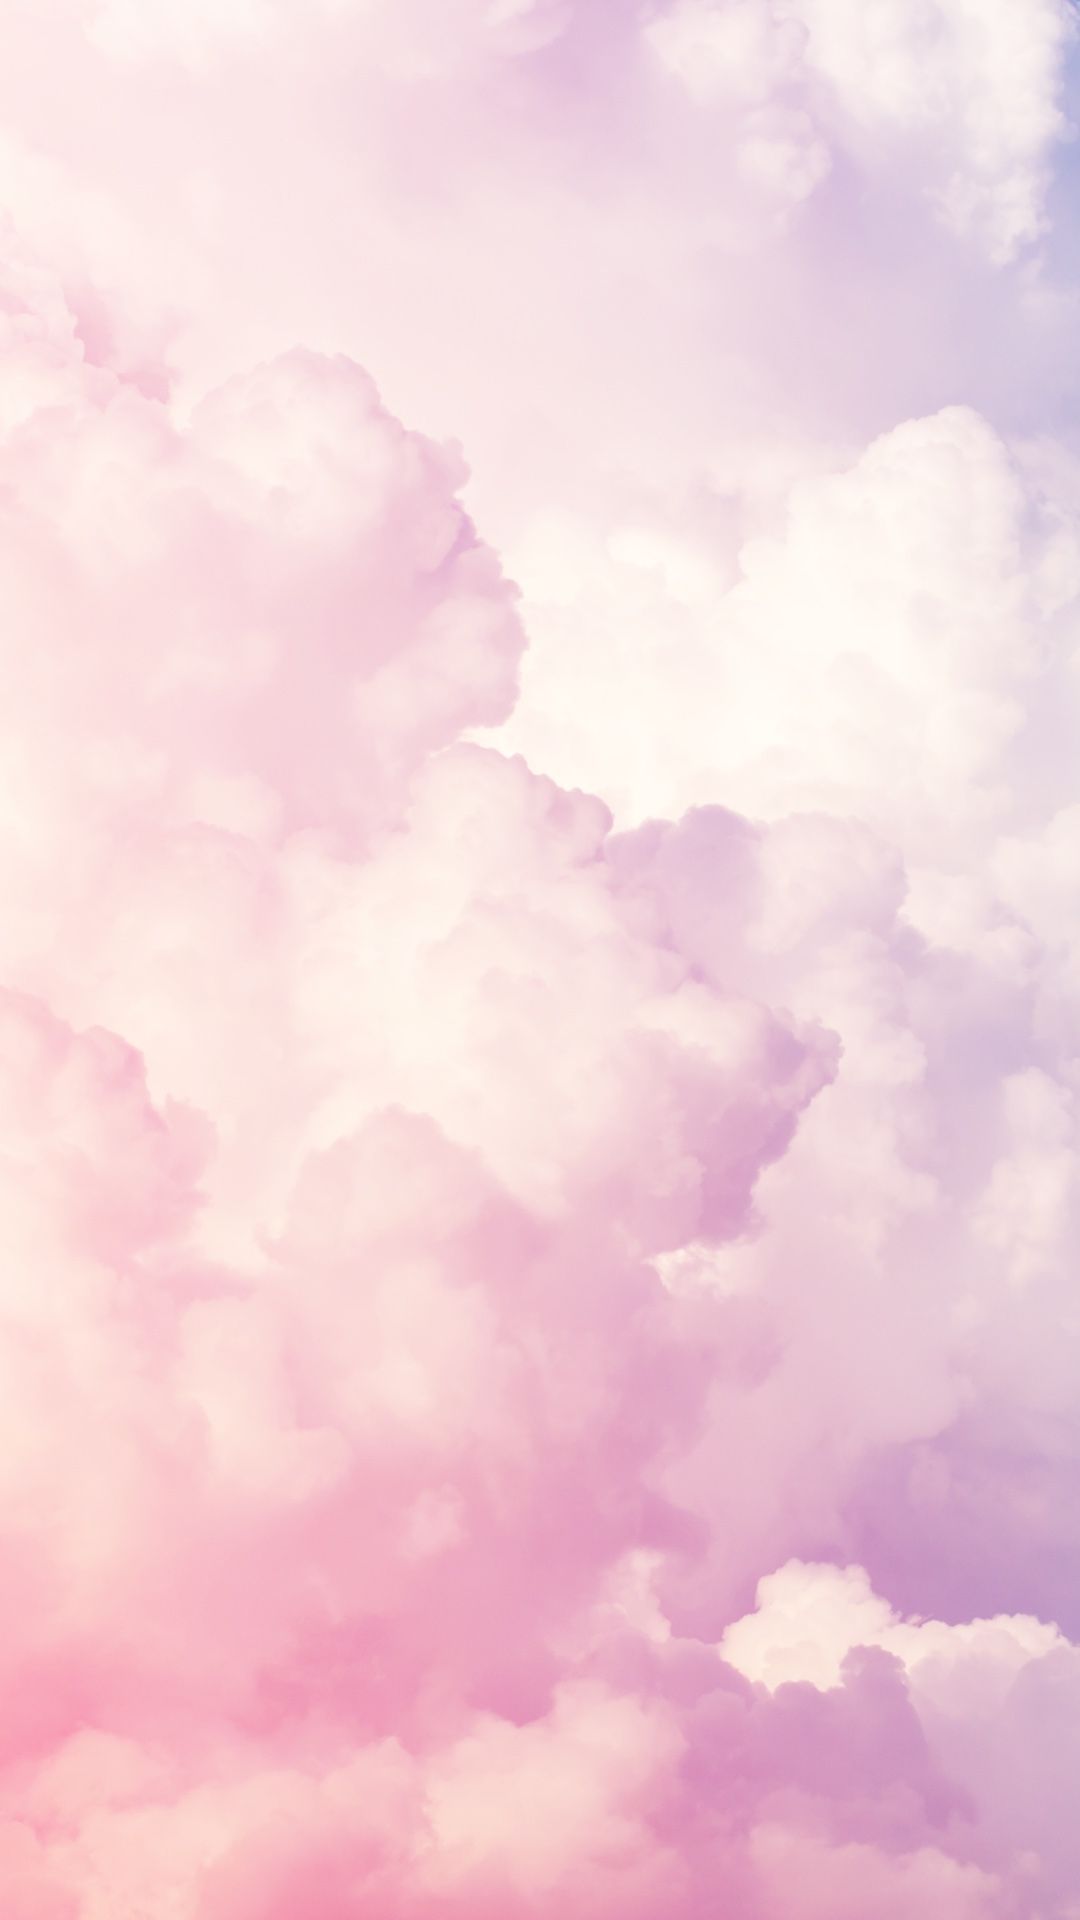 Cute Pink Cloud Wallpaper Free Cute Pink Cloud Background